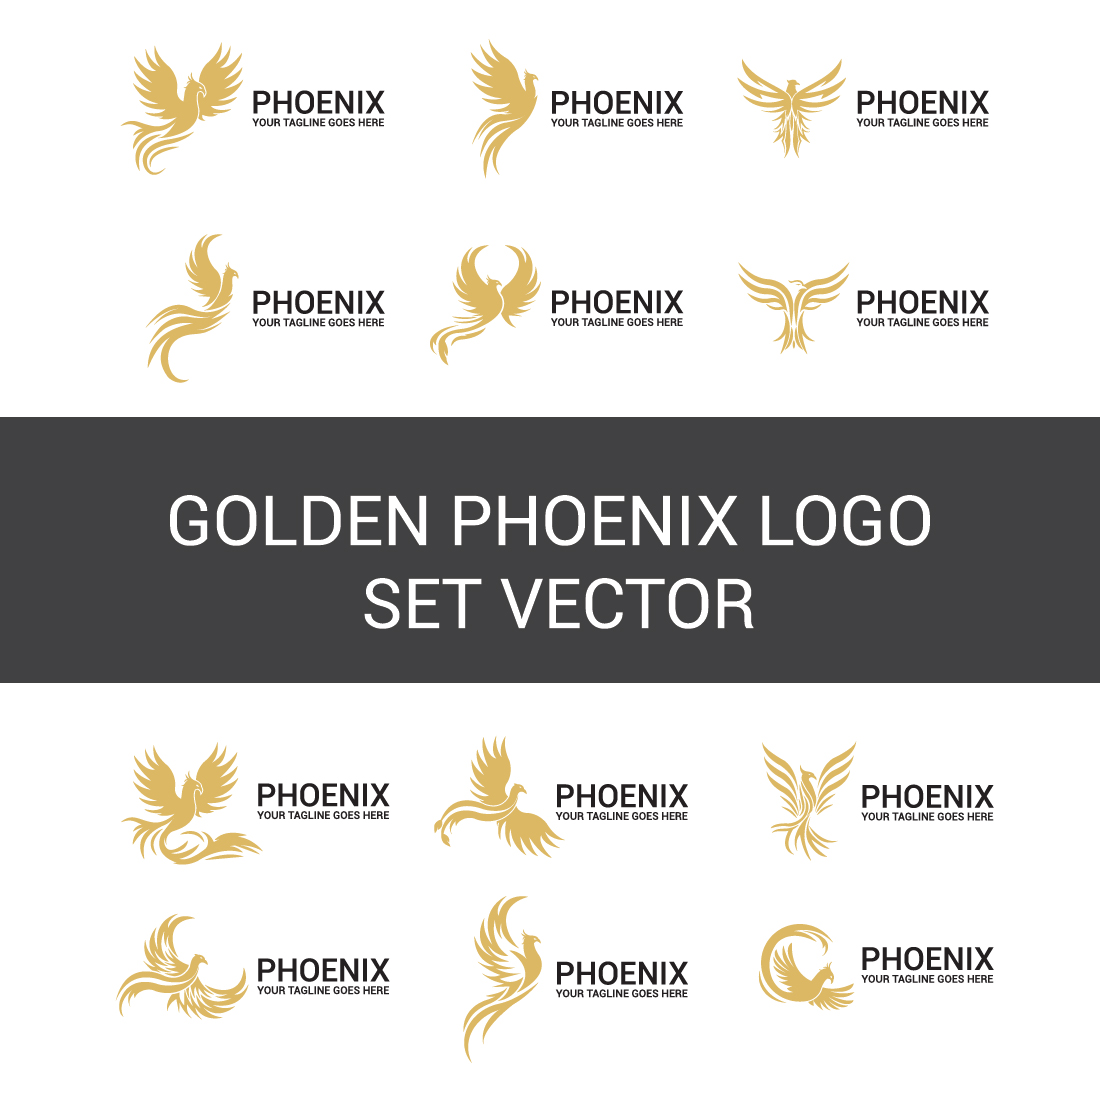 Golden Phoenix Logo Set Template cover image.